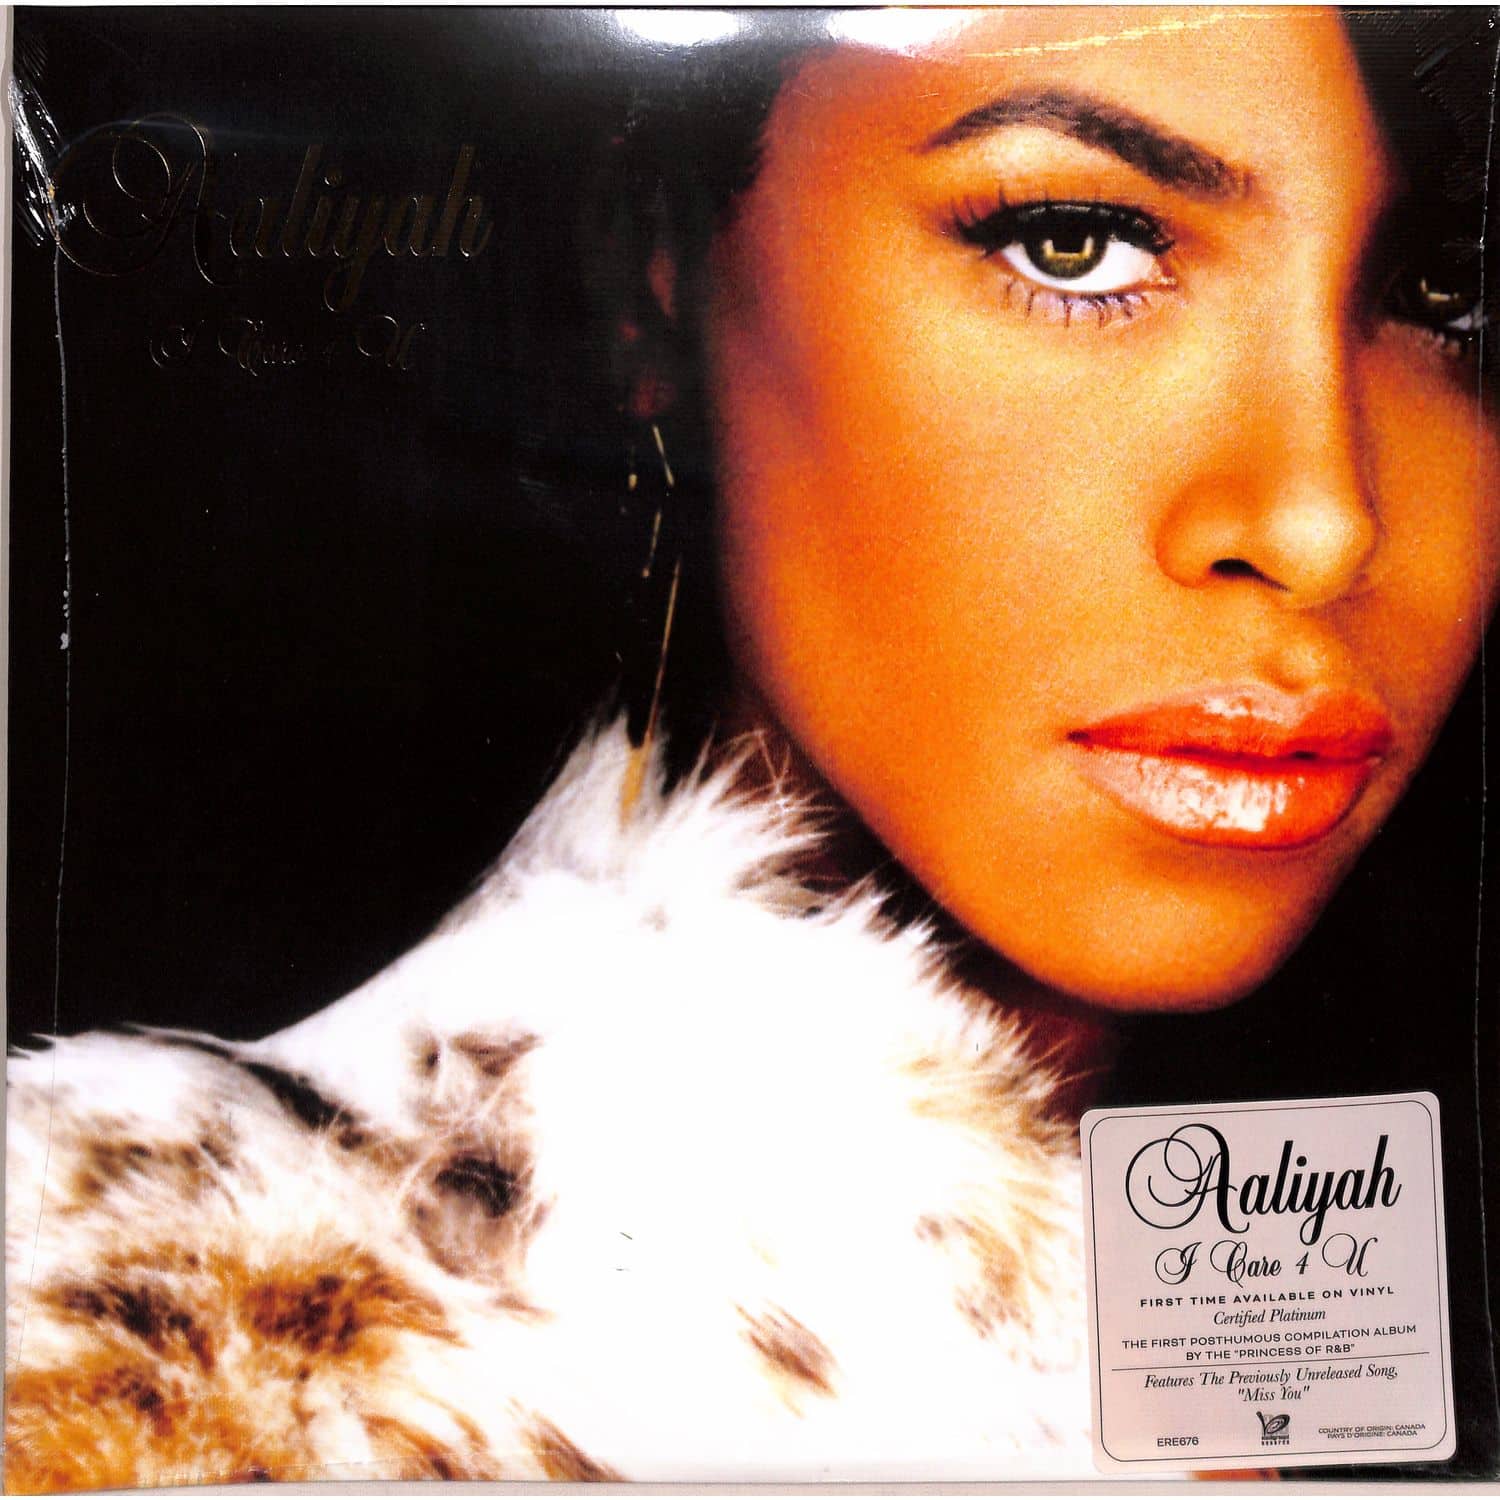 Aaliyah - I CARE 4 U 